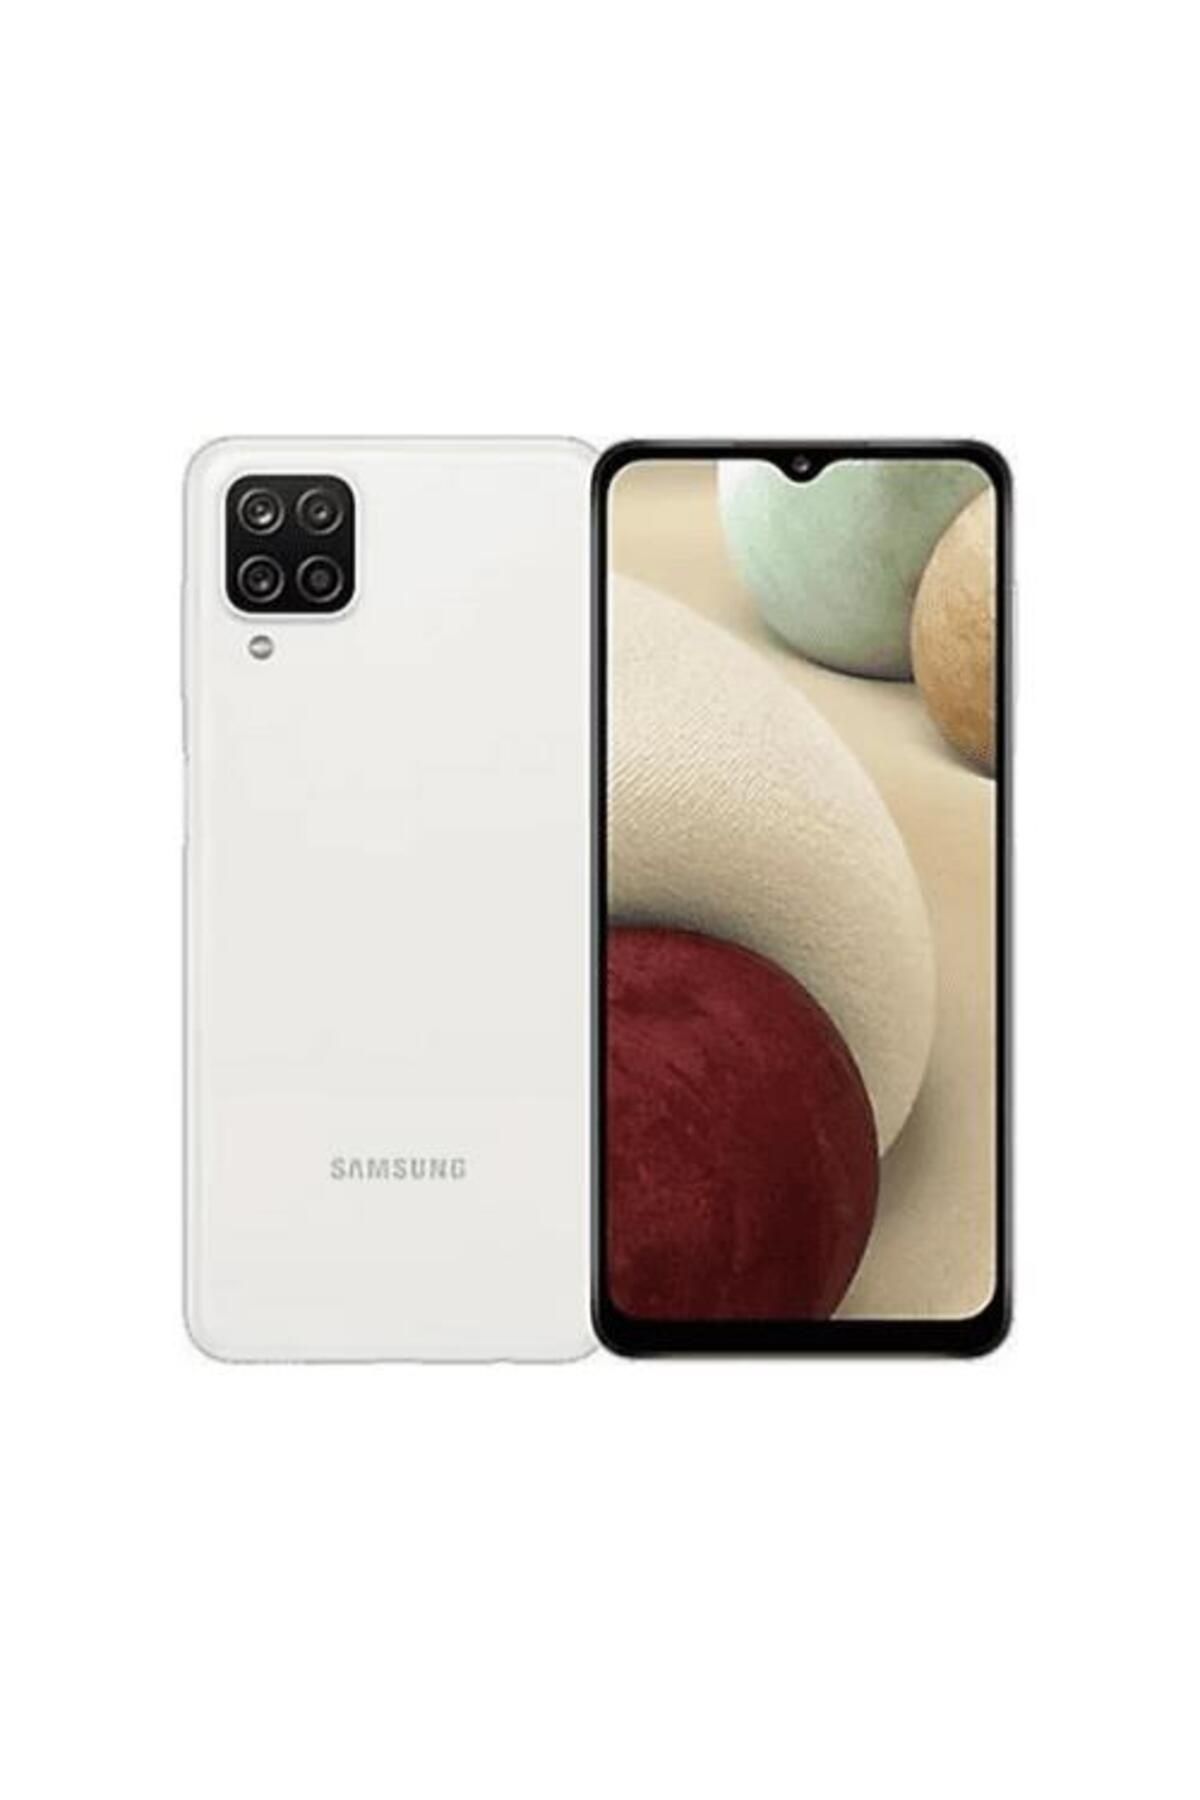 Samsung Yenilenmiş SAMSUNG GALAXY A12 64GB -A Kalite- Beyaz